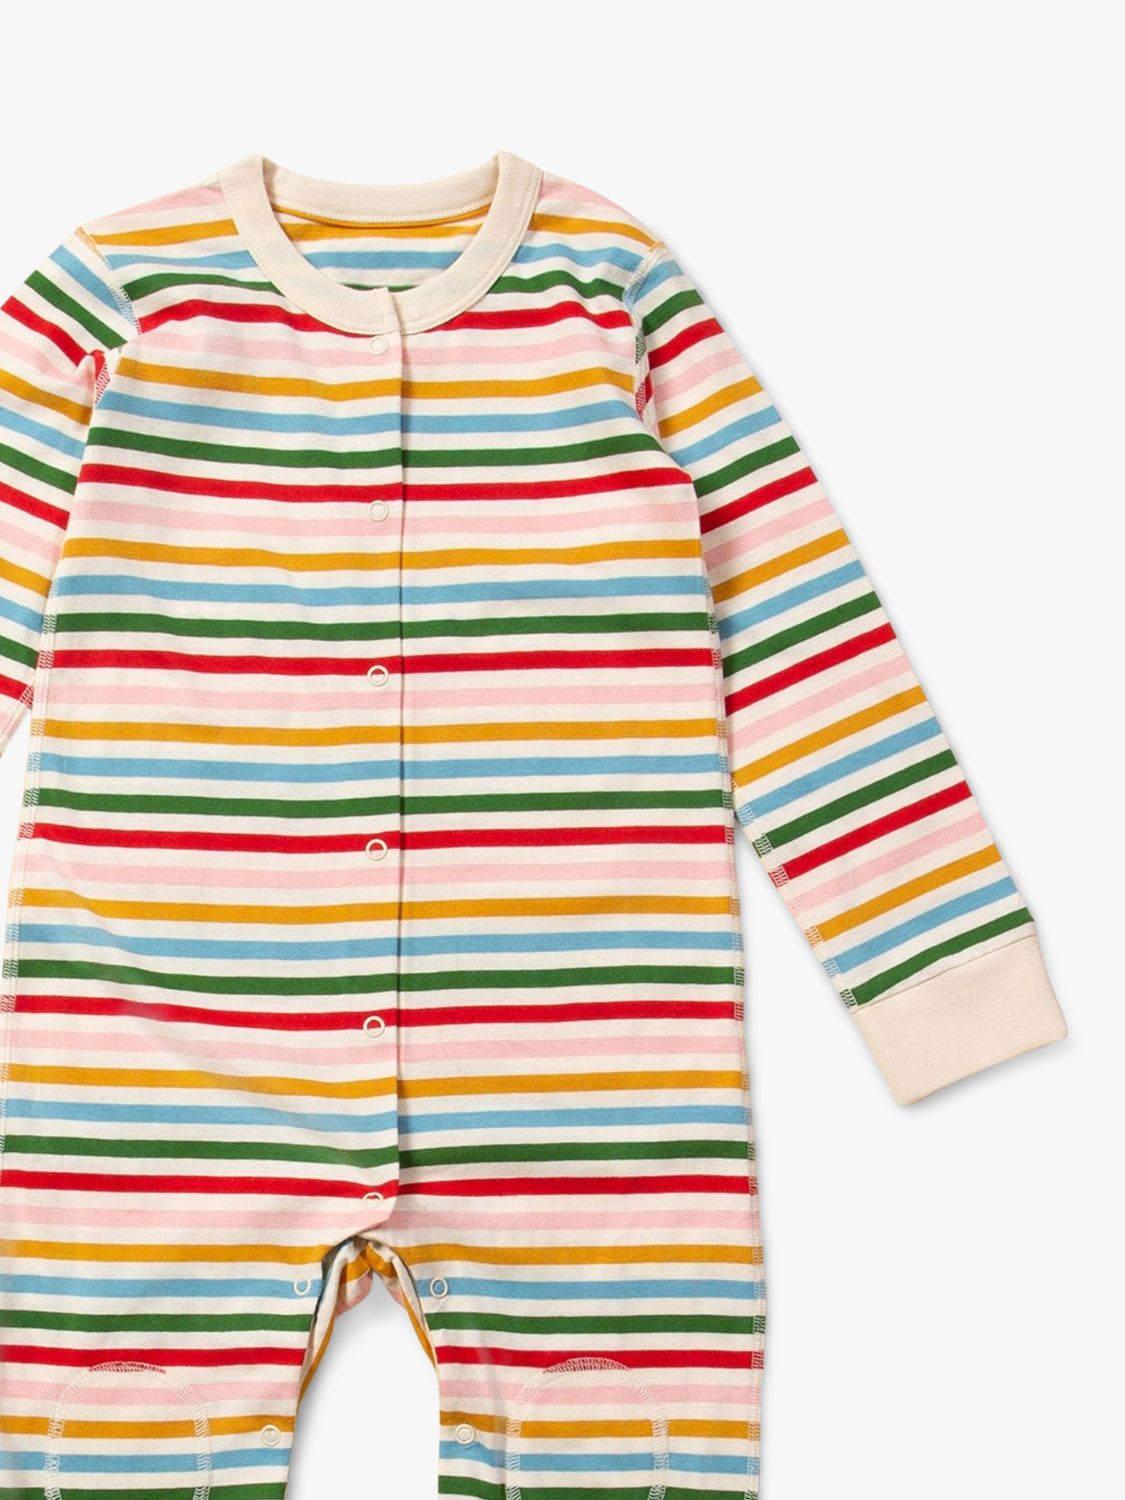 Little Green Radicals Kids' Adaptive Organic Cotton Summer Rainbow Striped Sleepsuit, Multi, 18-24 months